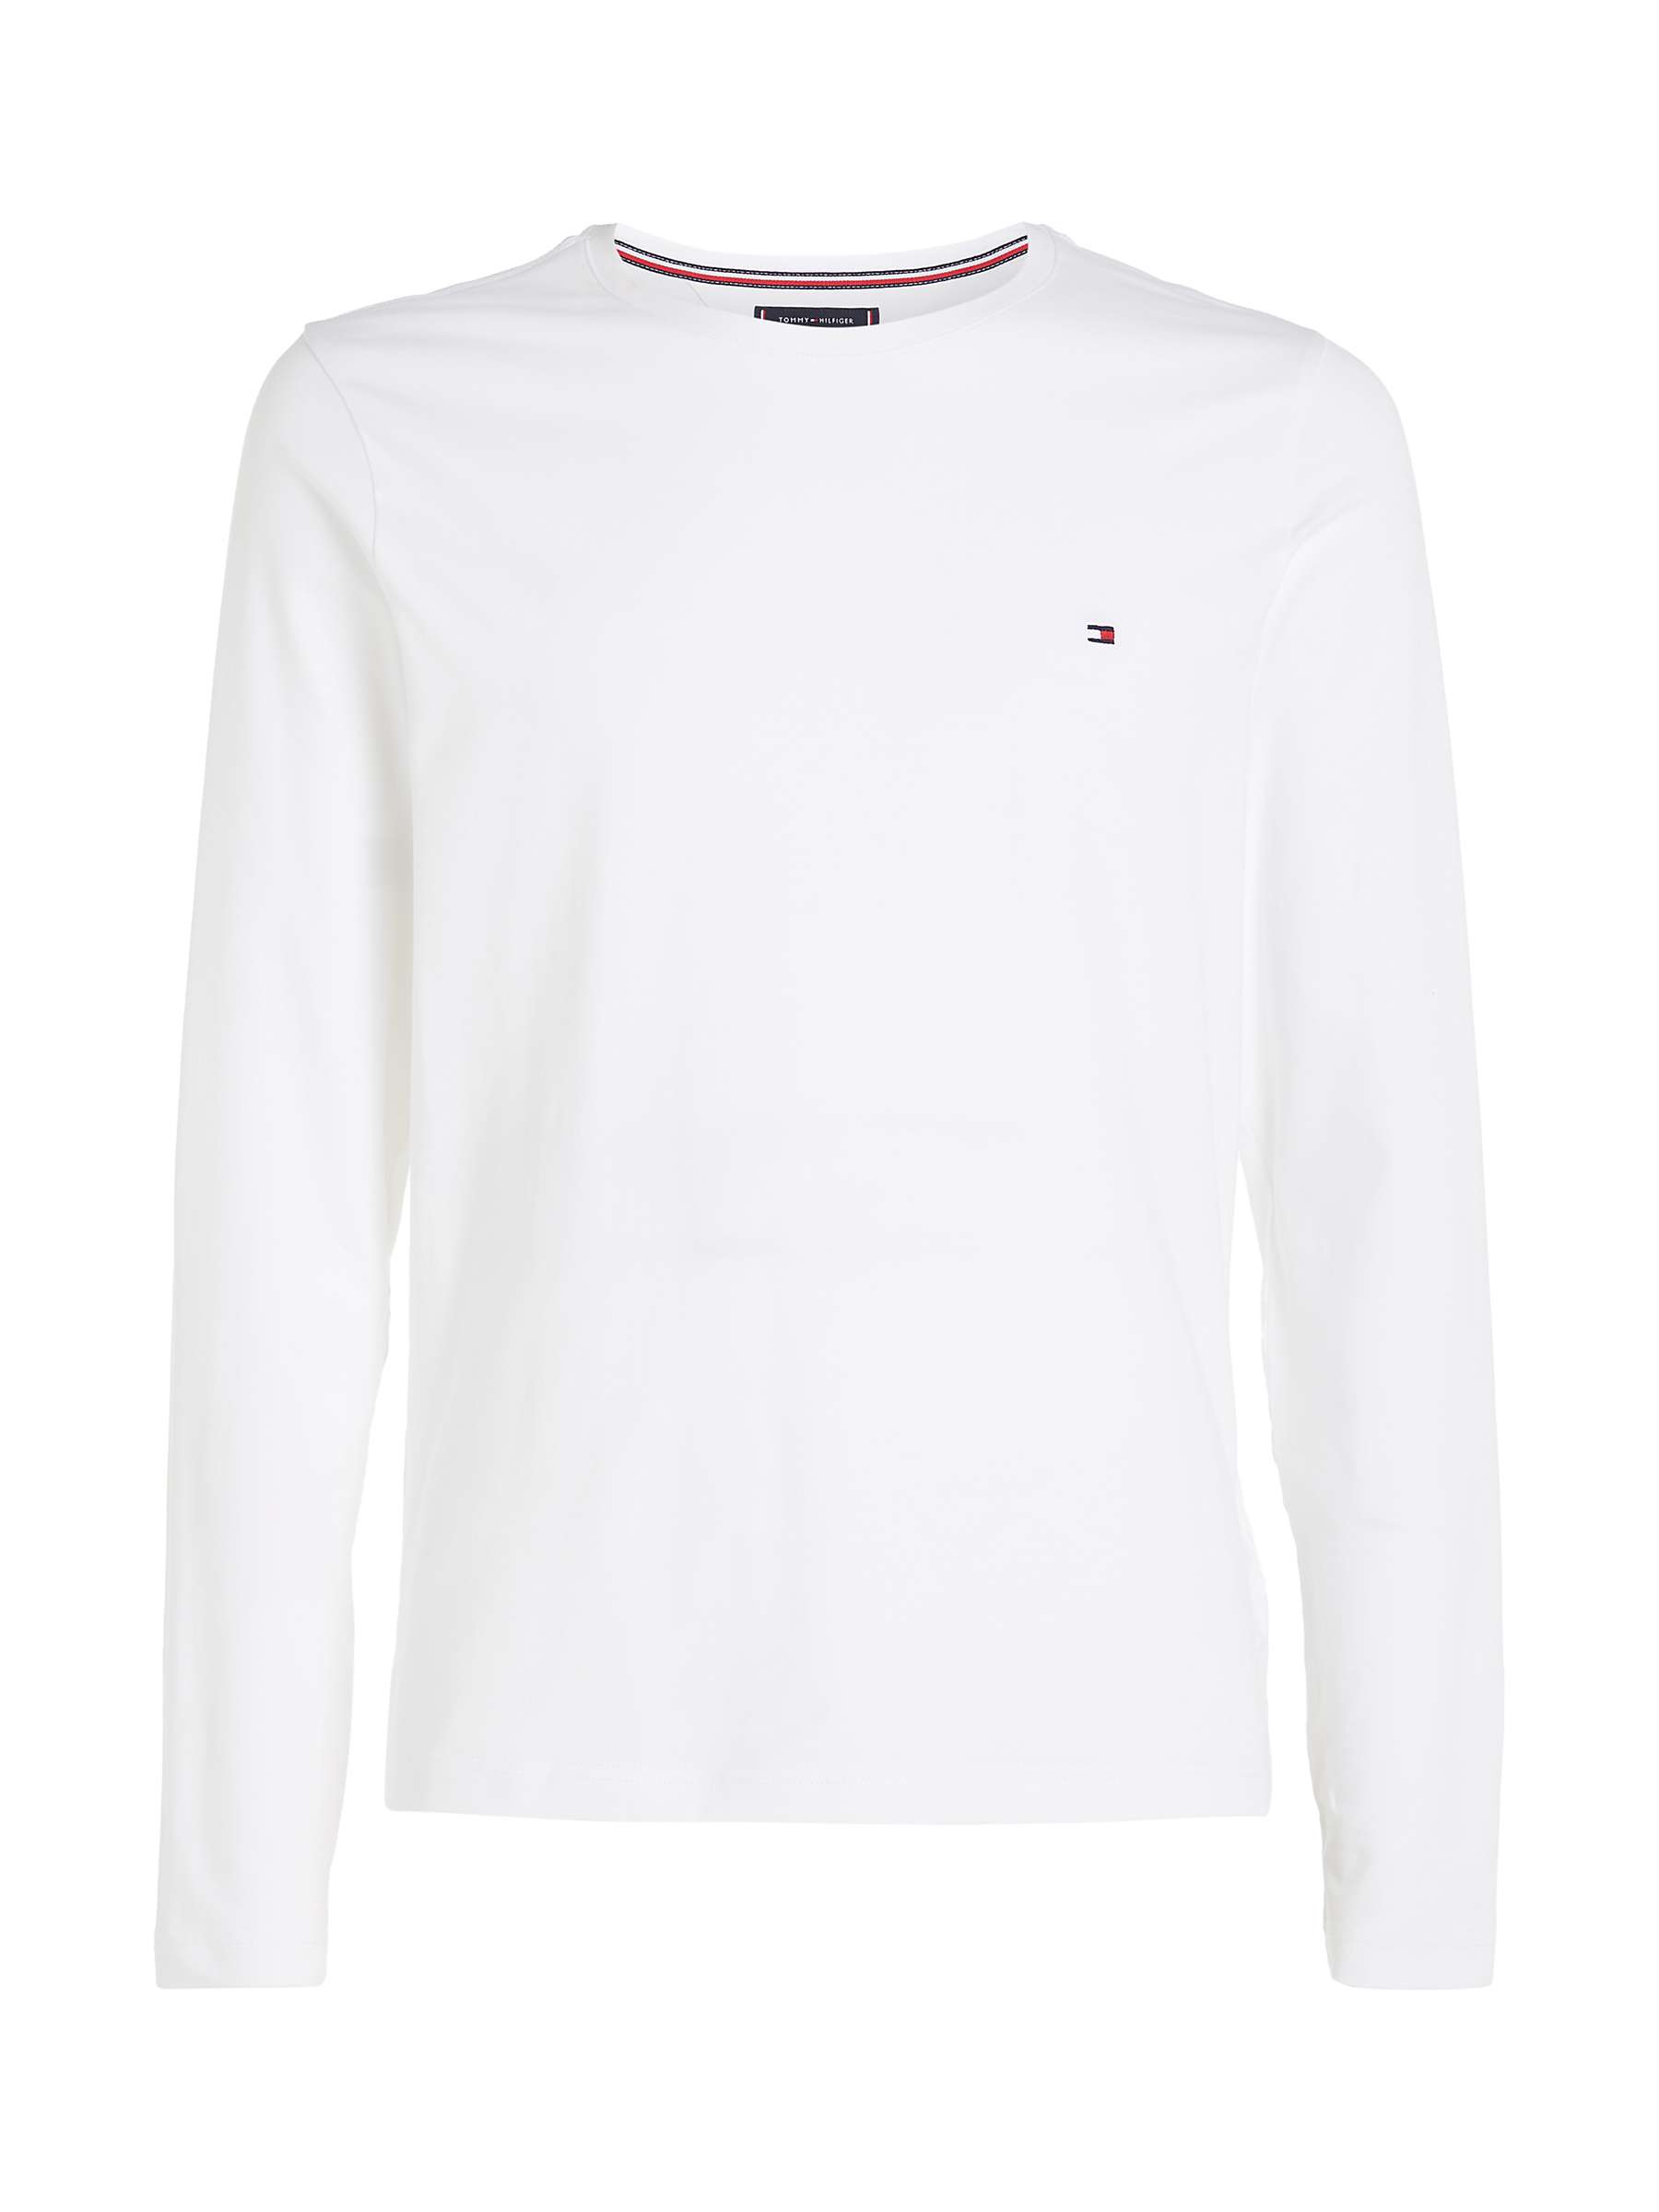 Buy Tommy Hilfiger Stretch Slim Fit Long Sleeve T-Shirt, White Online at johnlewis.com